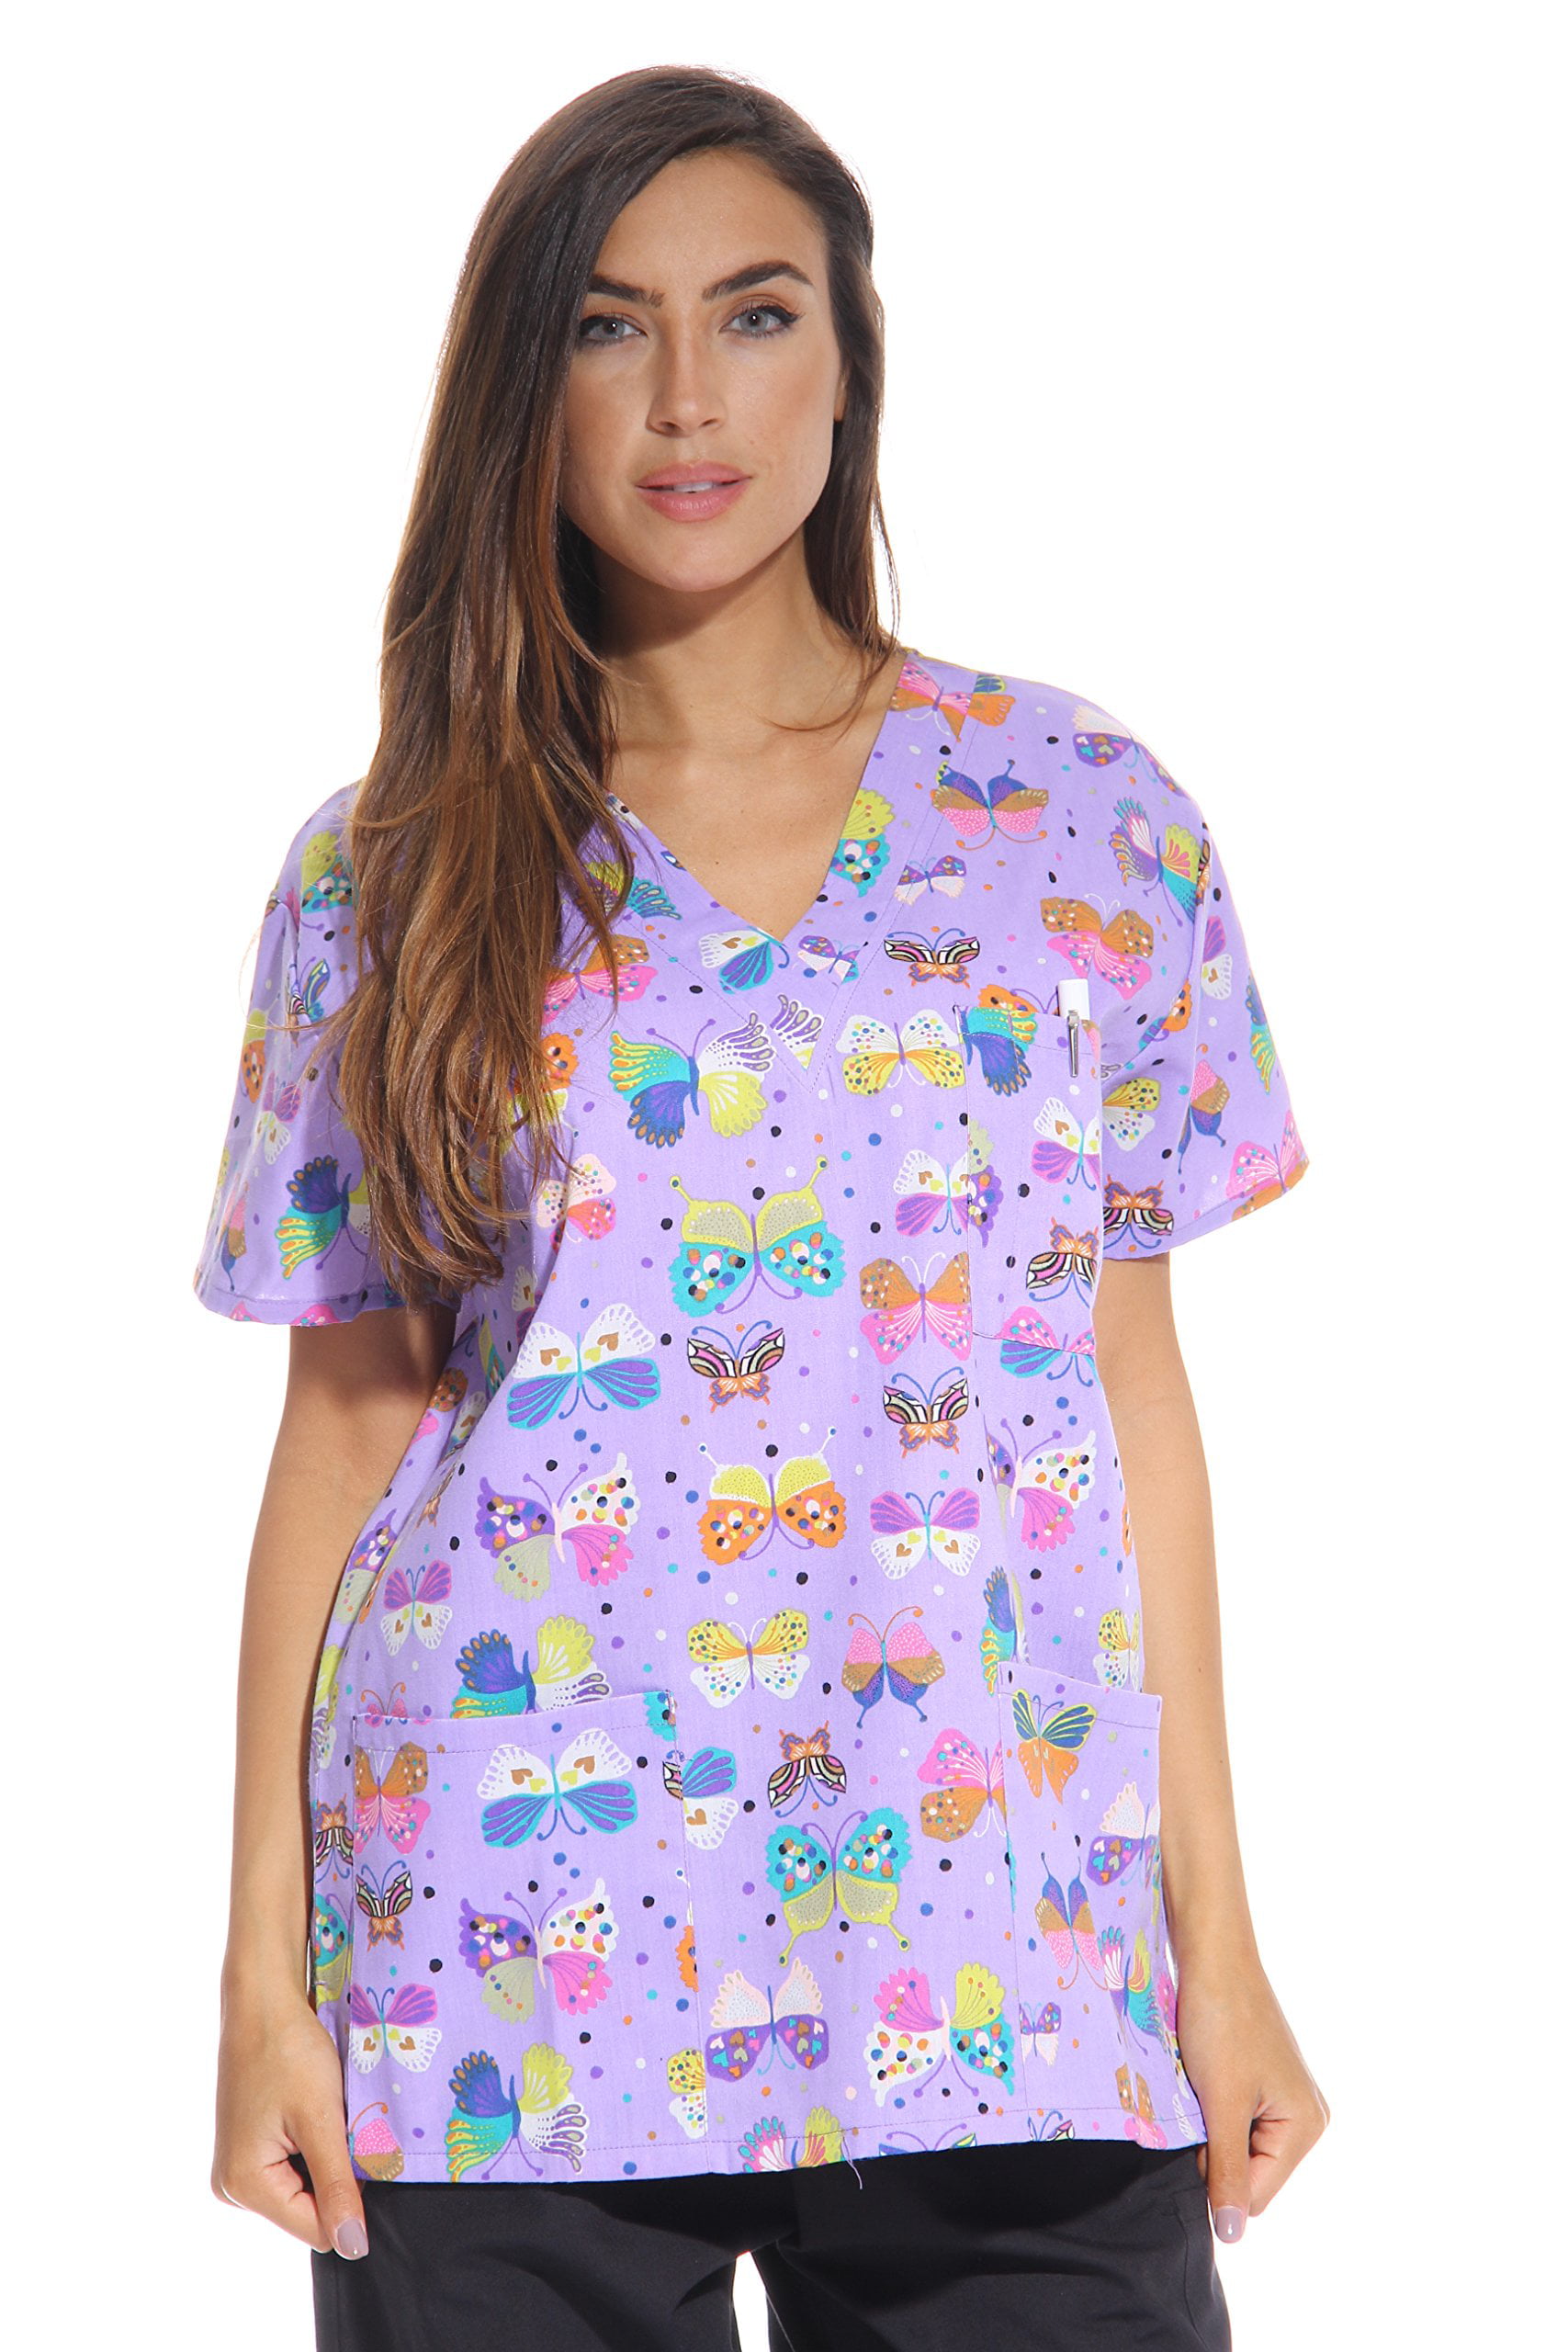 Womens Fashion Medical Nursing Scrub Tops Printed Light Blue Heart Butterfly XL 